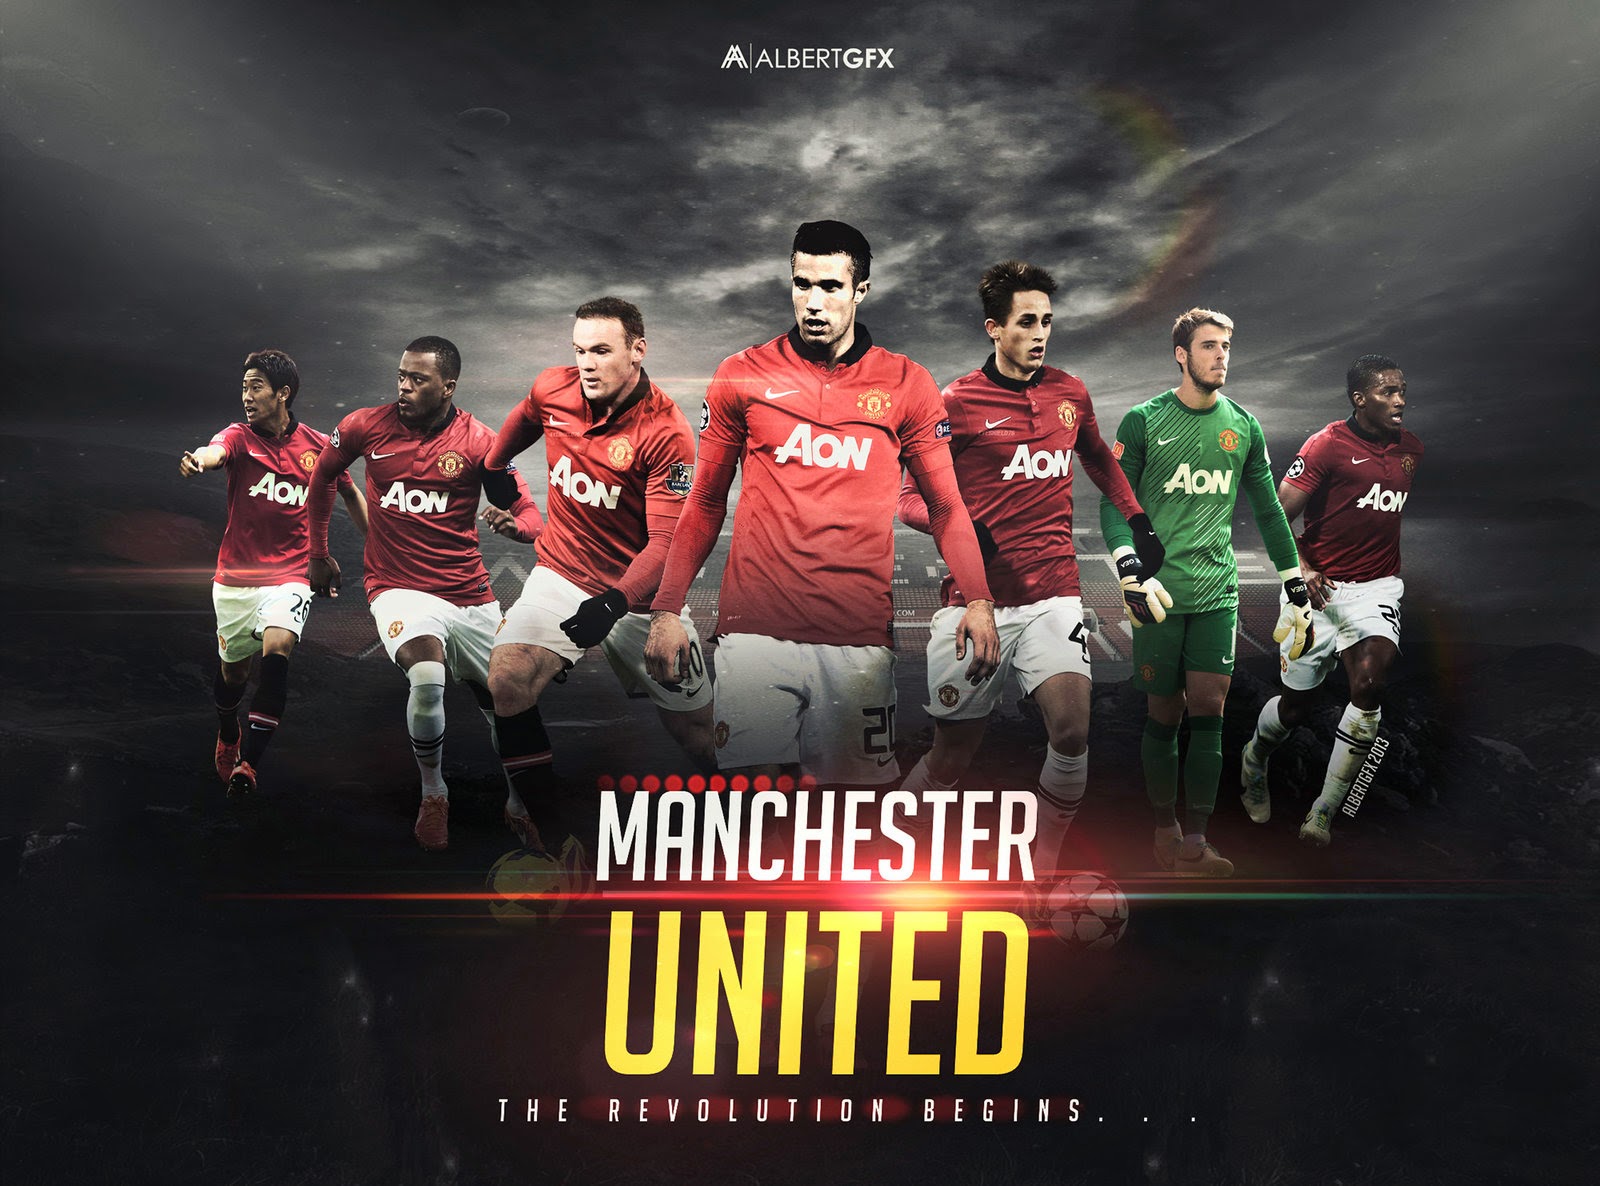 Manchester United Wallpaper Hd 2015 WallpaperSafari